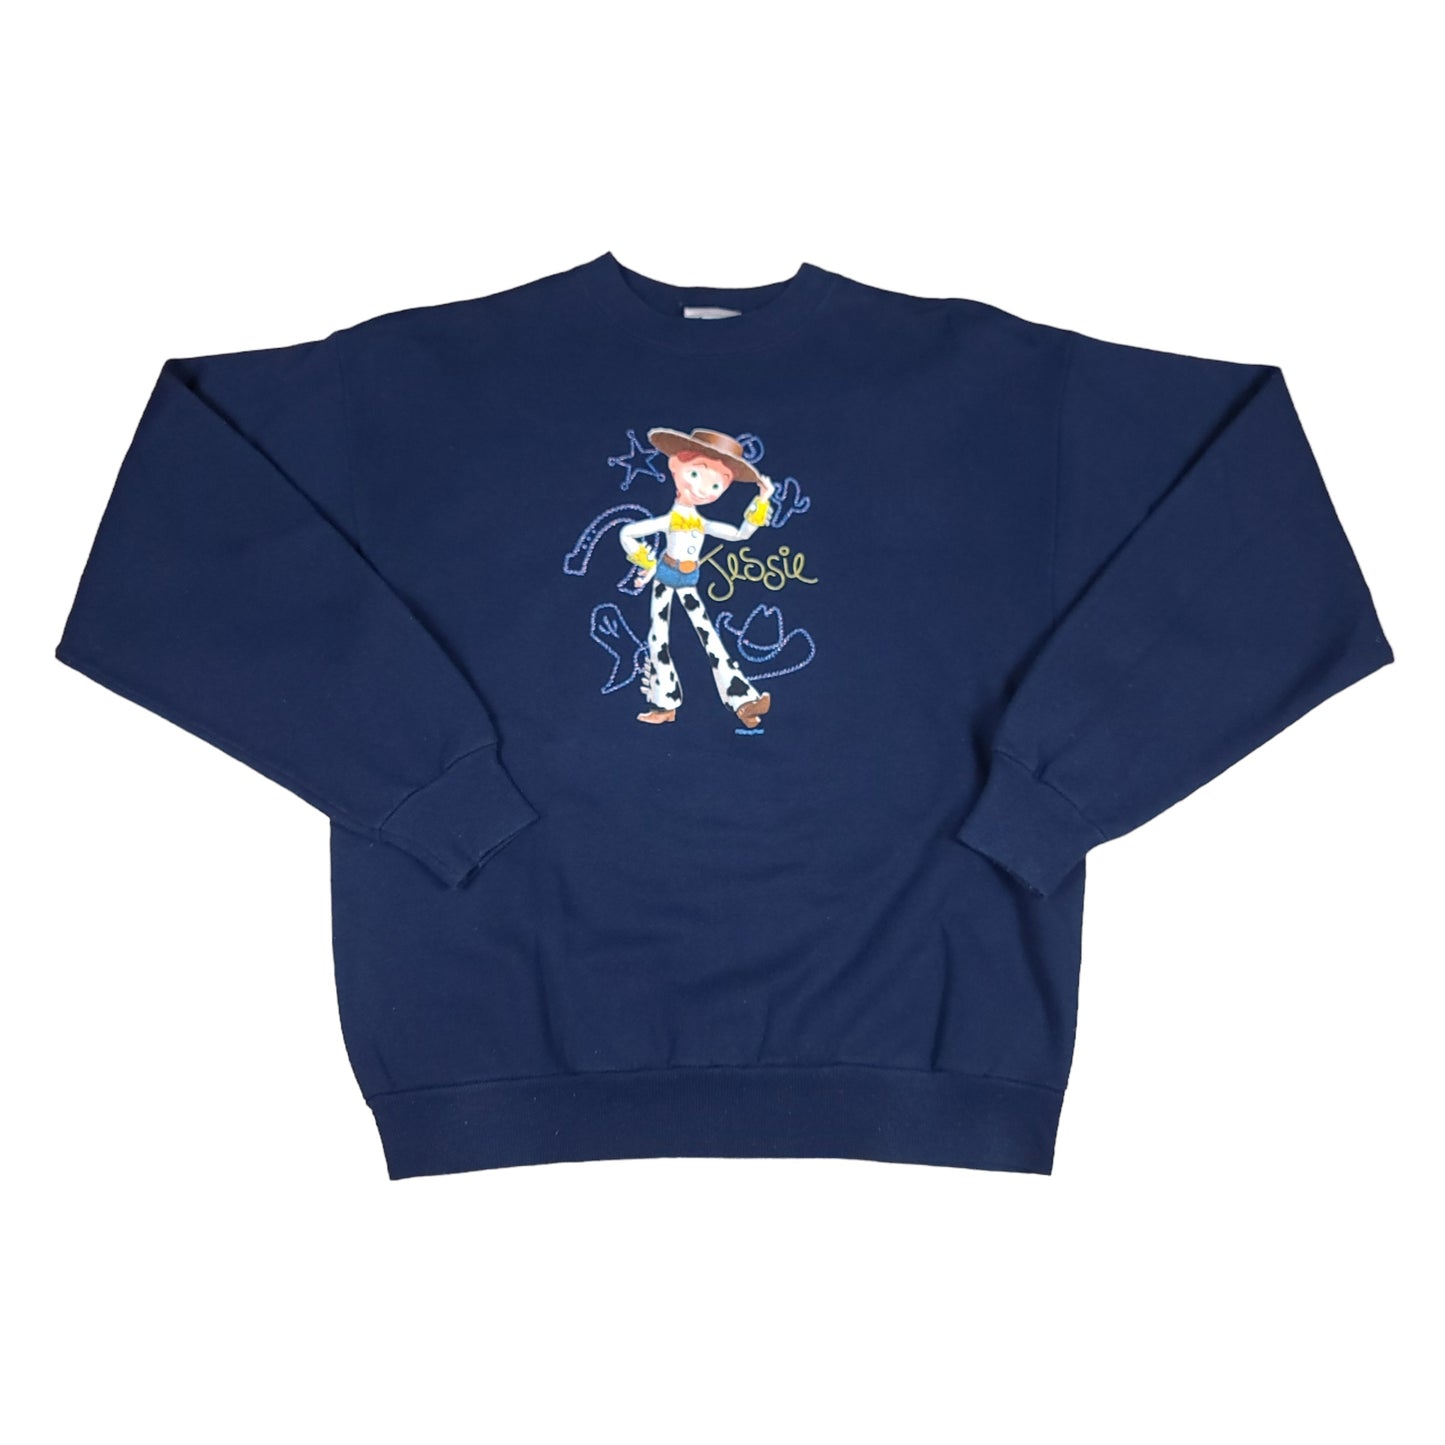 Vintage Jessie Toy Story Navy Blue Sweatshirt